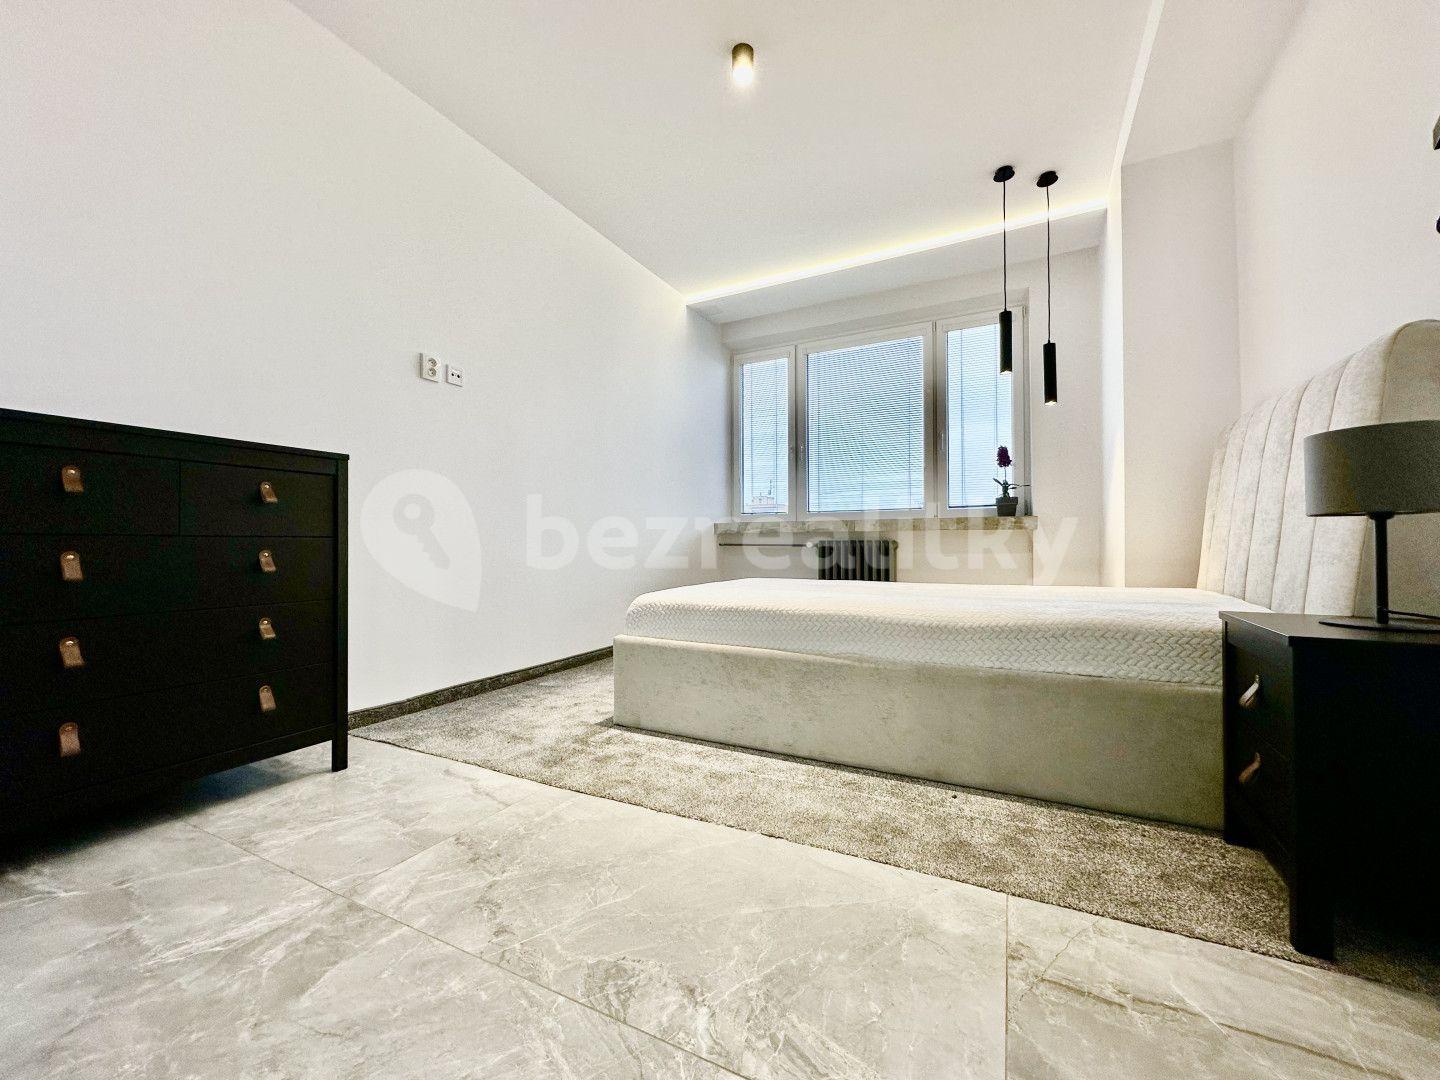 3 bedroom with open-plan kitchen flat for sale, 87 m², Karasova, Ostrava, Moravskoslezský Region